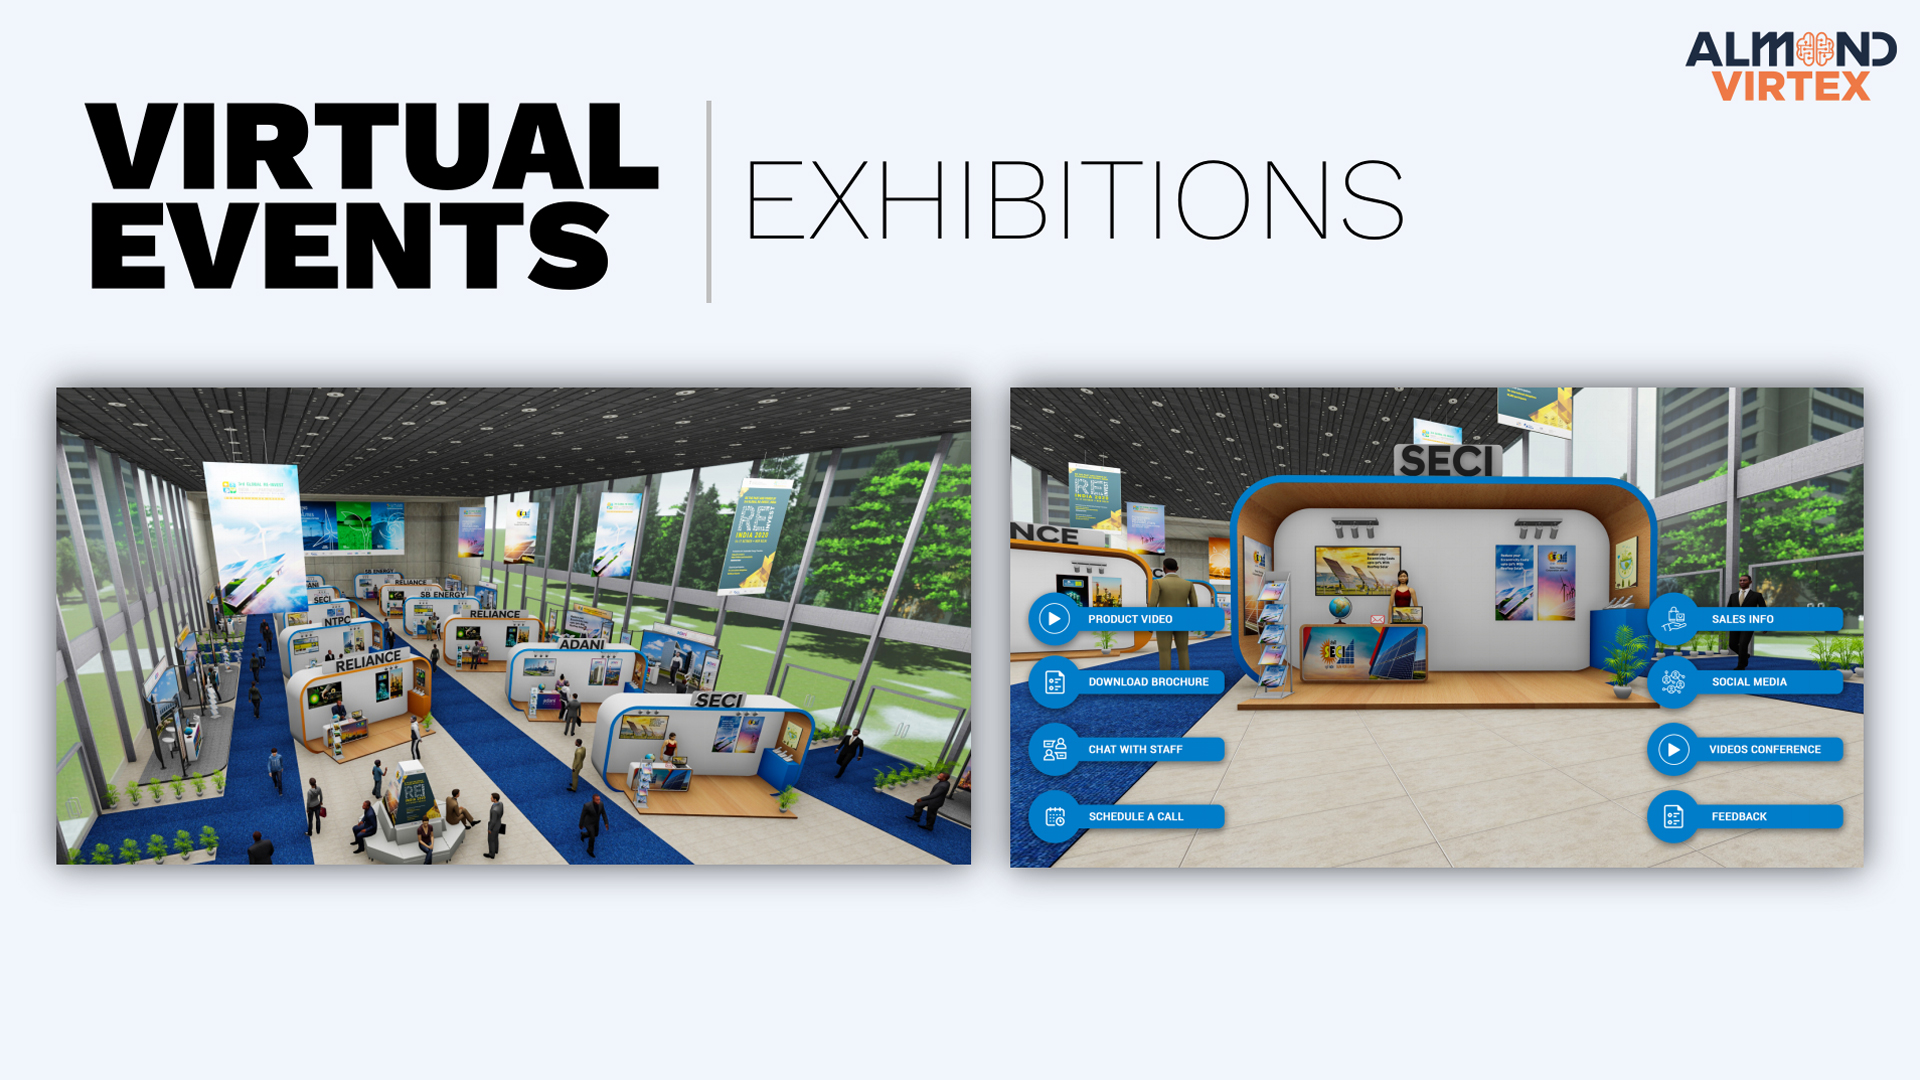 Almond Virtex Virtual Event Platform - Exhibitors